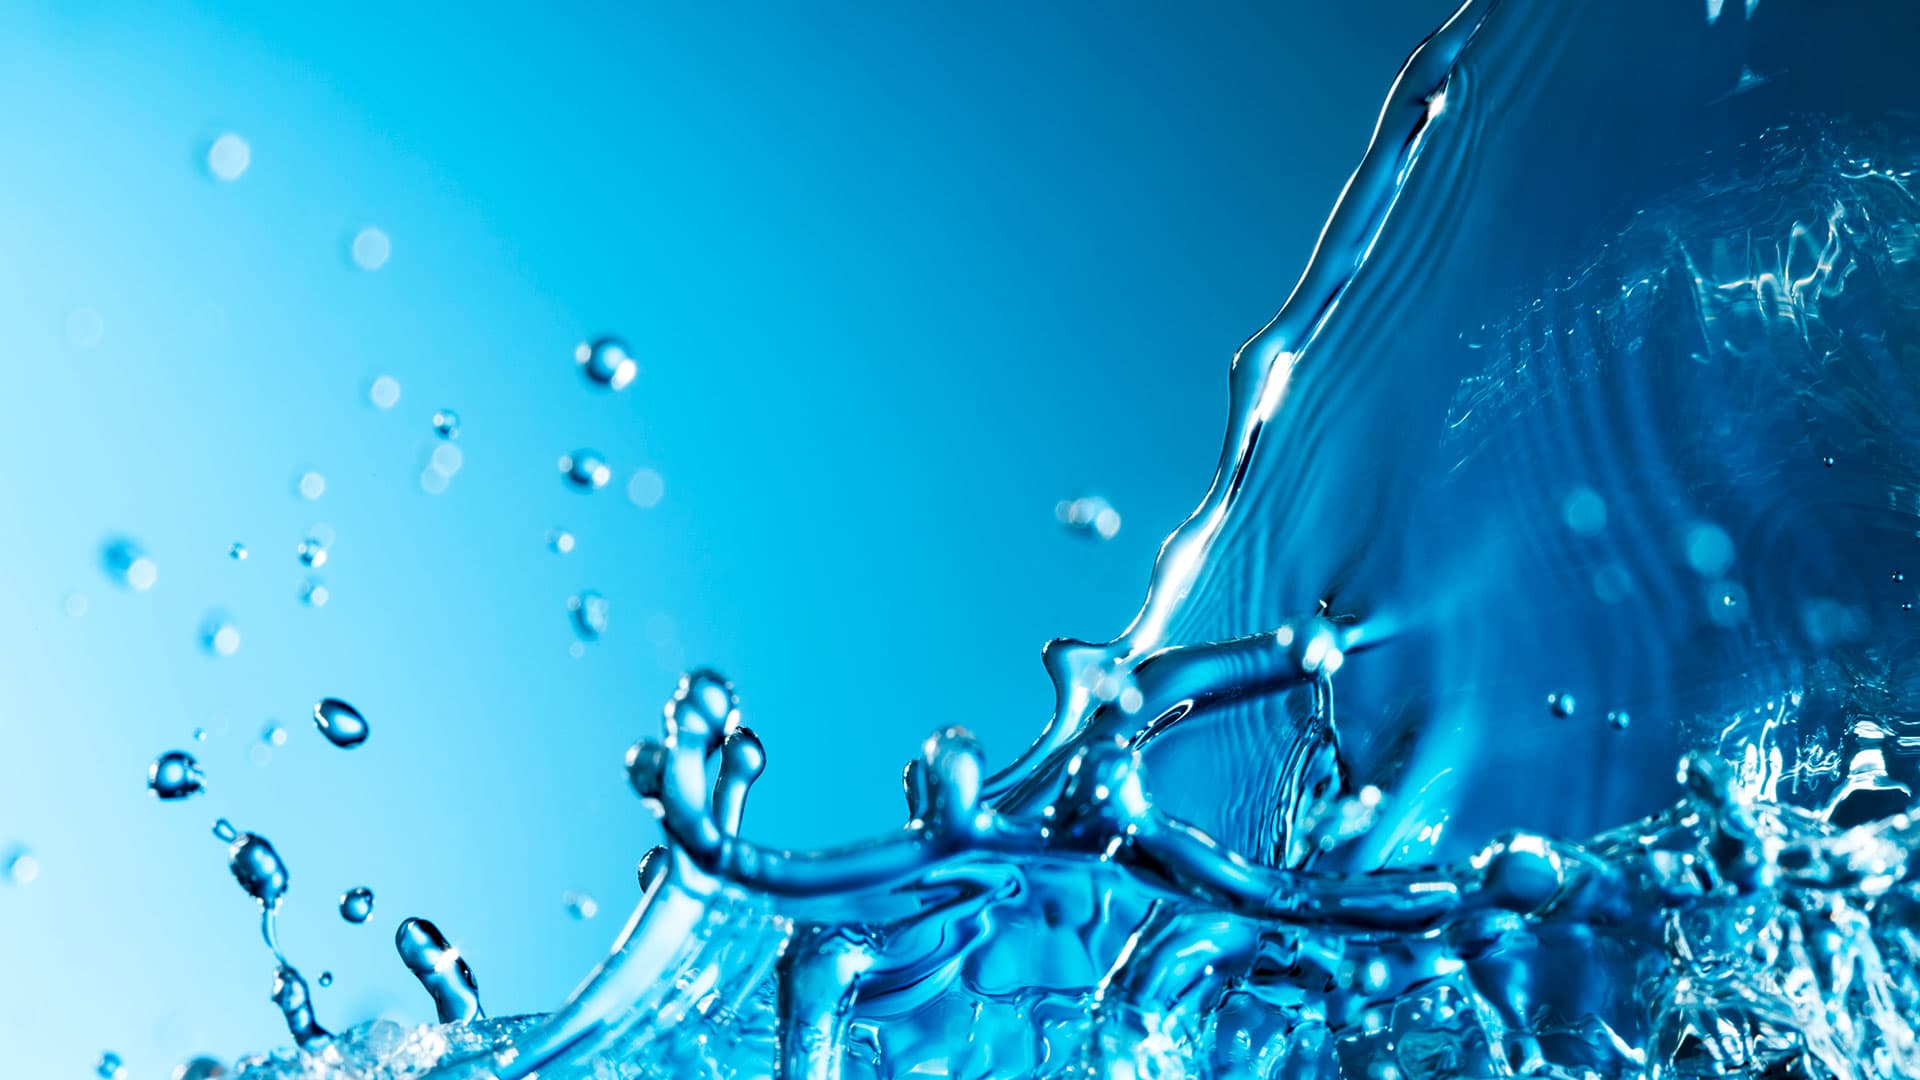 Water Splash Background Image